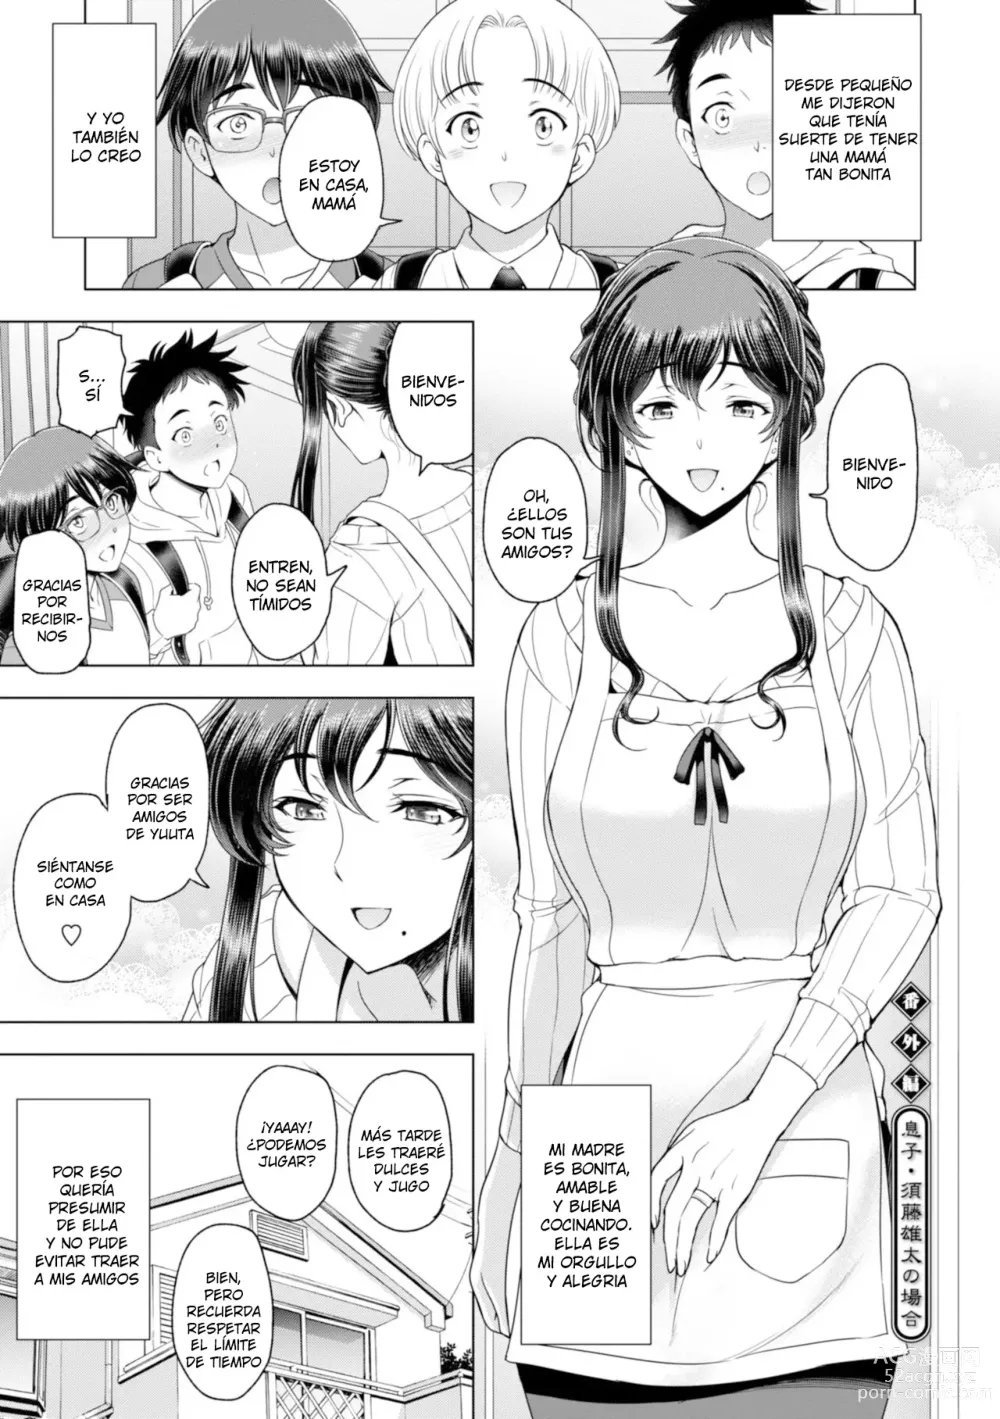 Page 5 of manga Nettori Netorare EP. 0.5, EP. 11.5 ~Esposa . El caso de Saori Sudou (extra)~